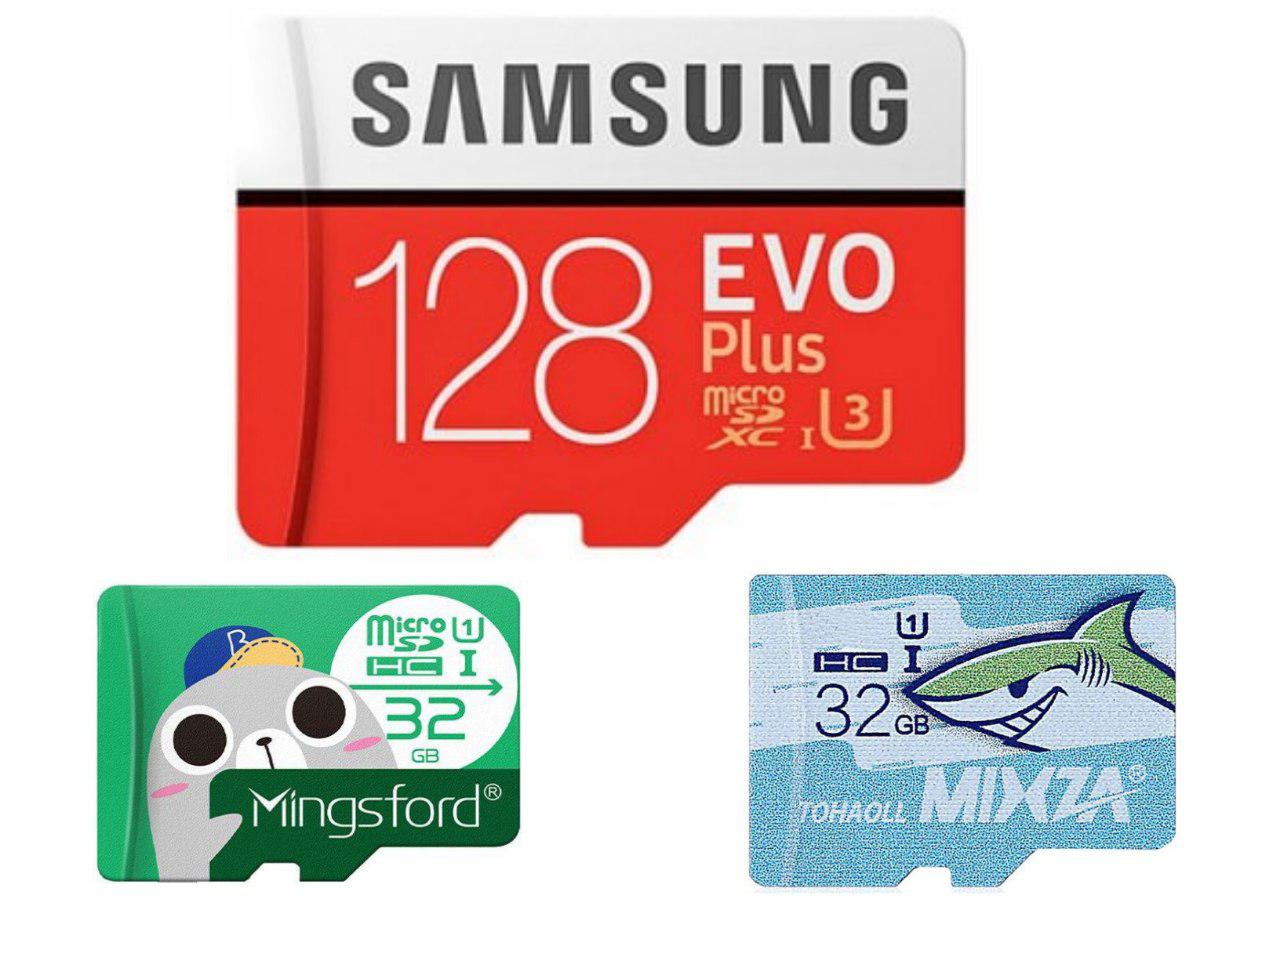 MicroSD Samsung Evo Plus, Mixza y Mingsford